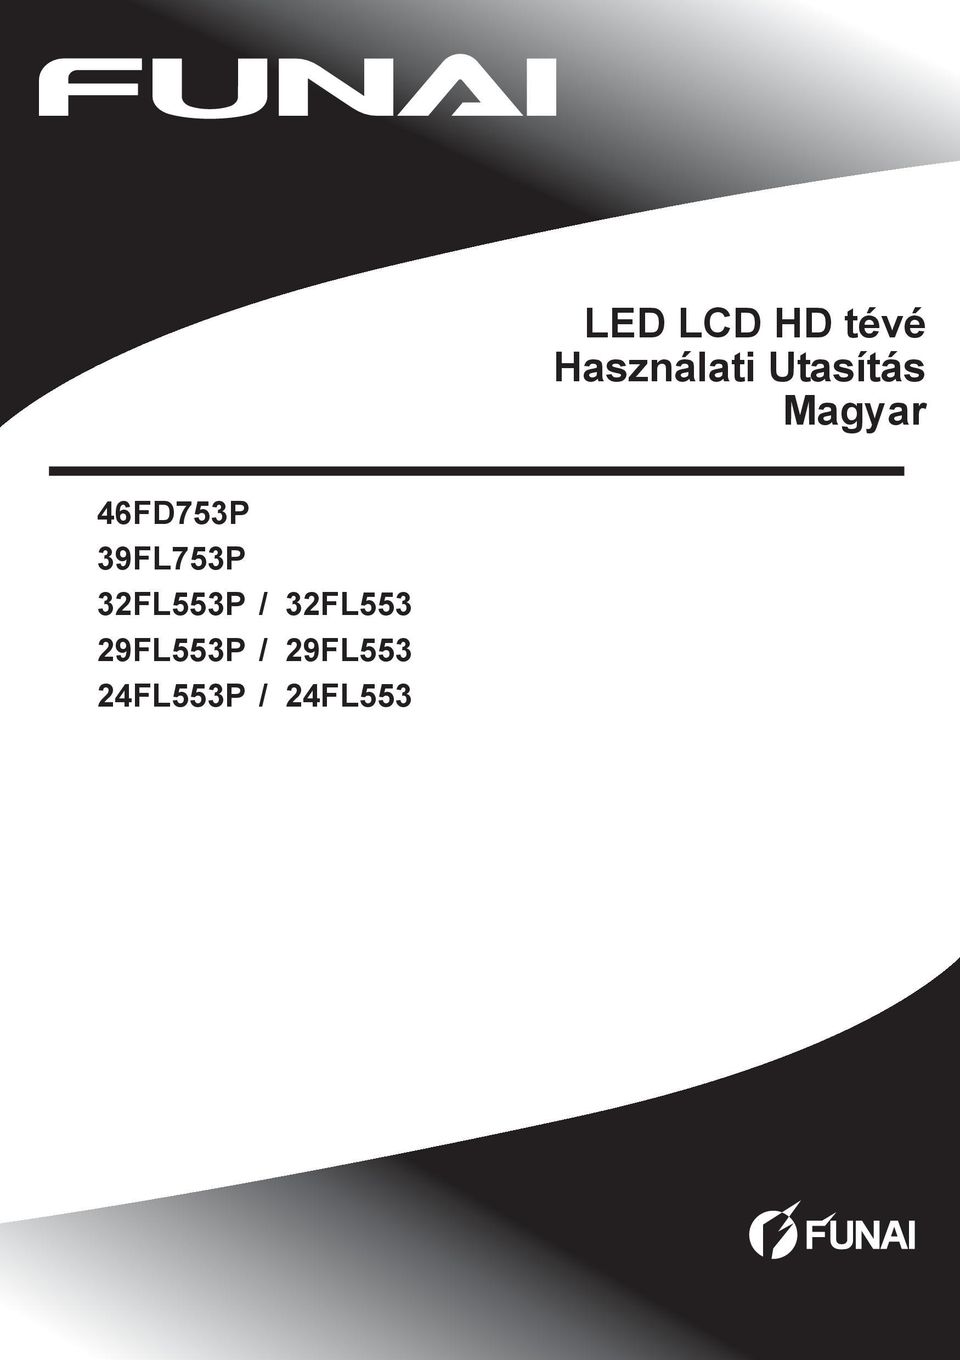 24FL553P / 24FL553 LED LCD HD